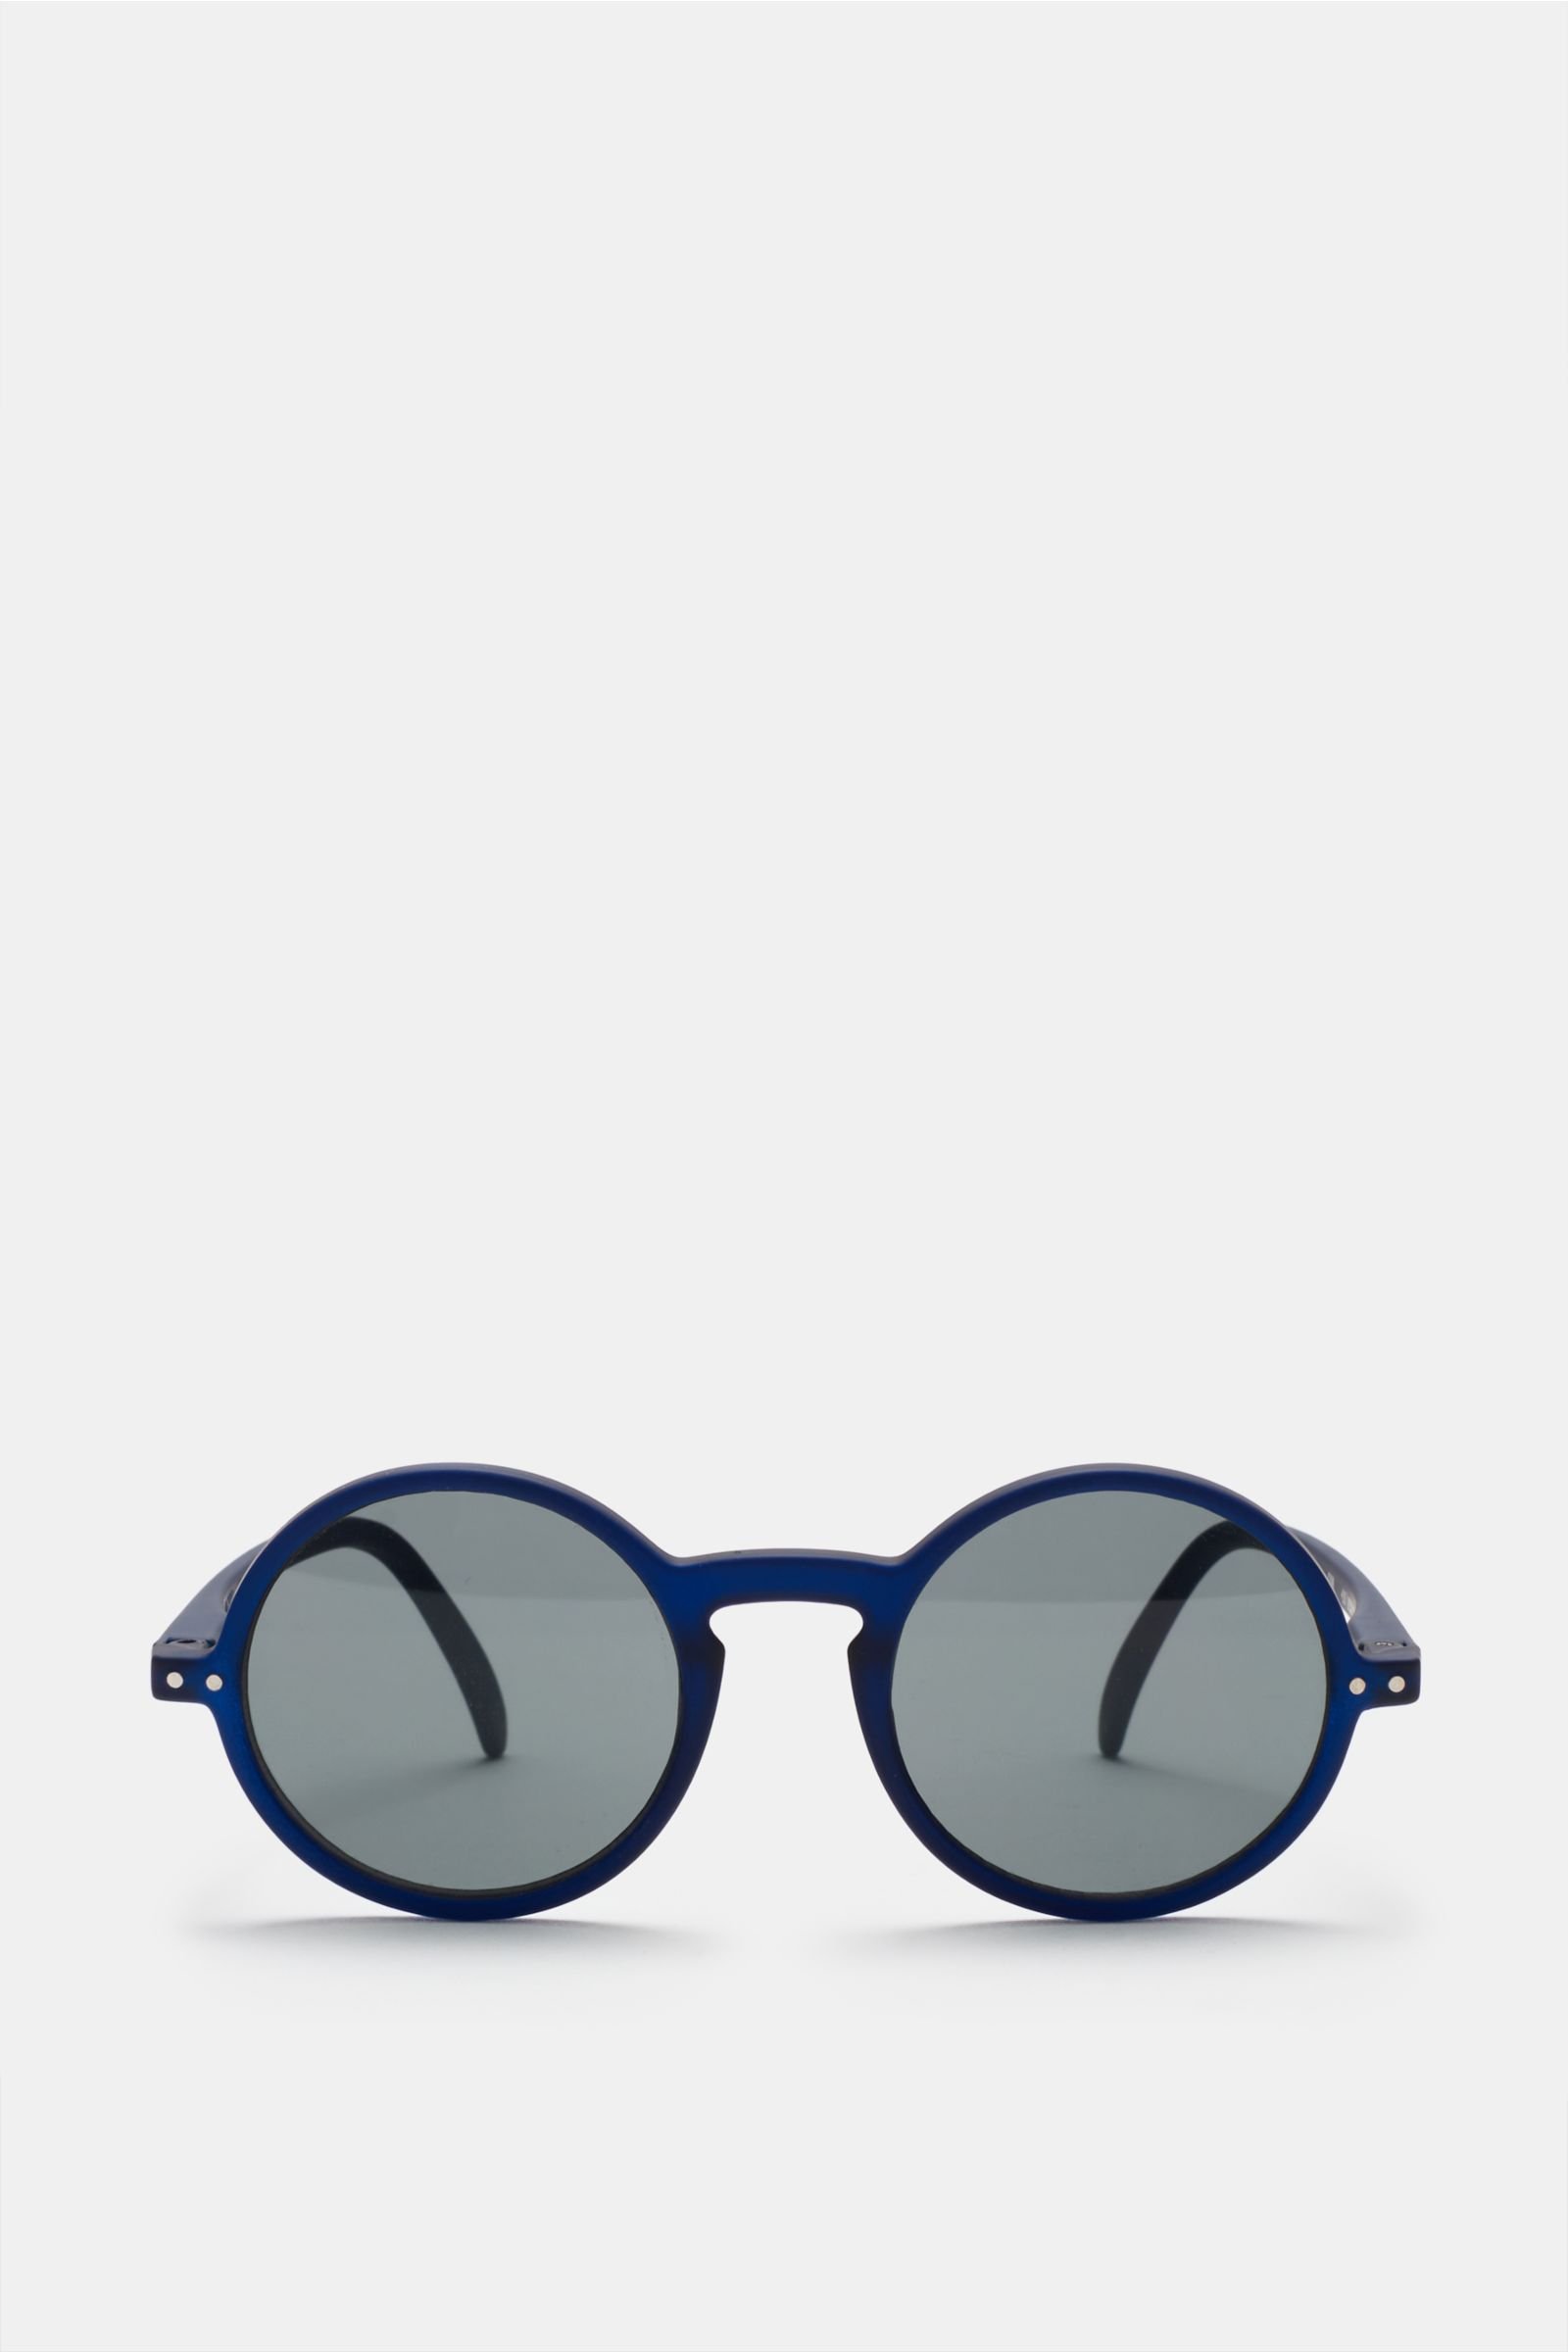 Sunglasses '#G Sun' navy/grey